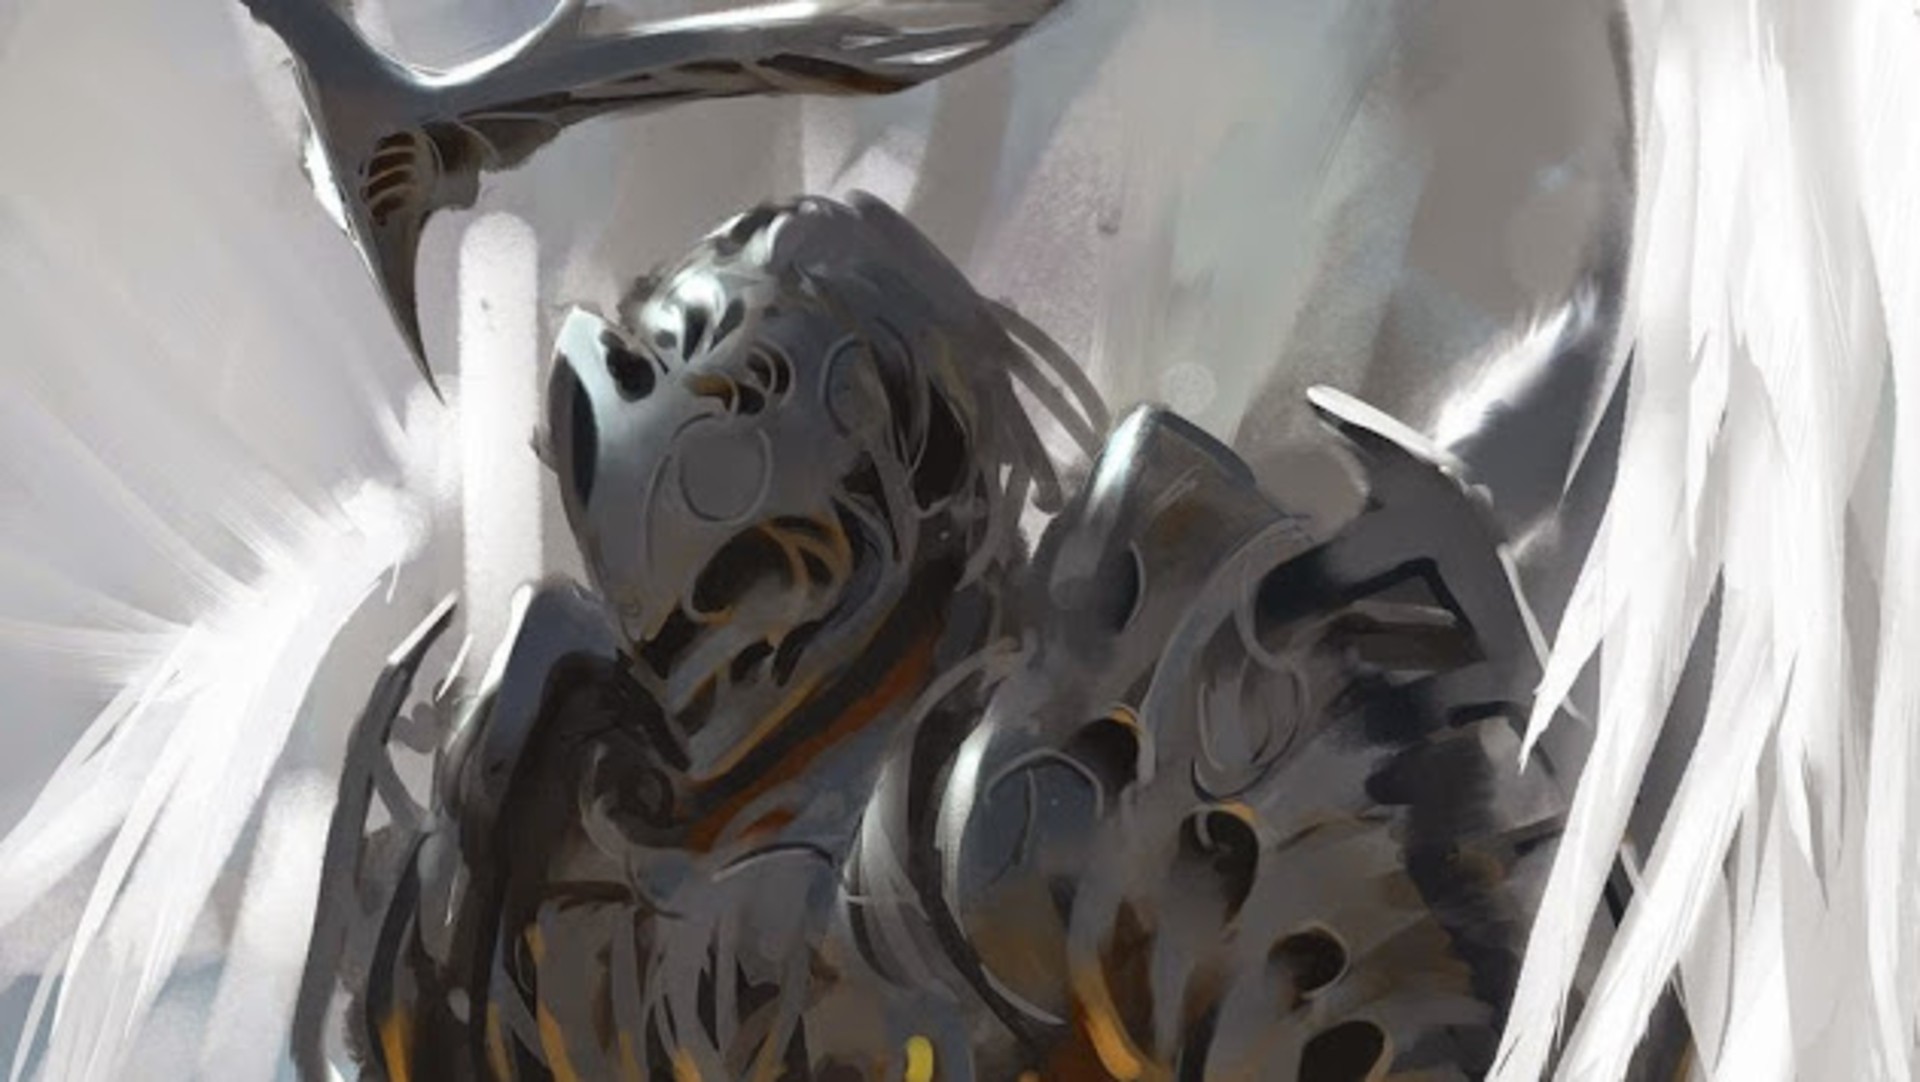 General 1920x1082 WLOP fantasy art artwork fantasy armor armor